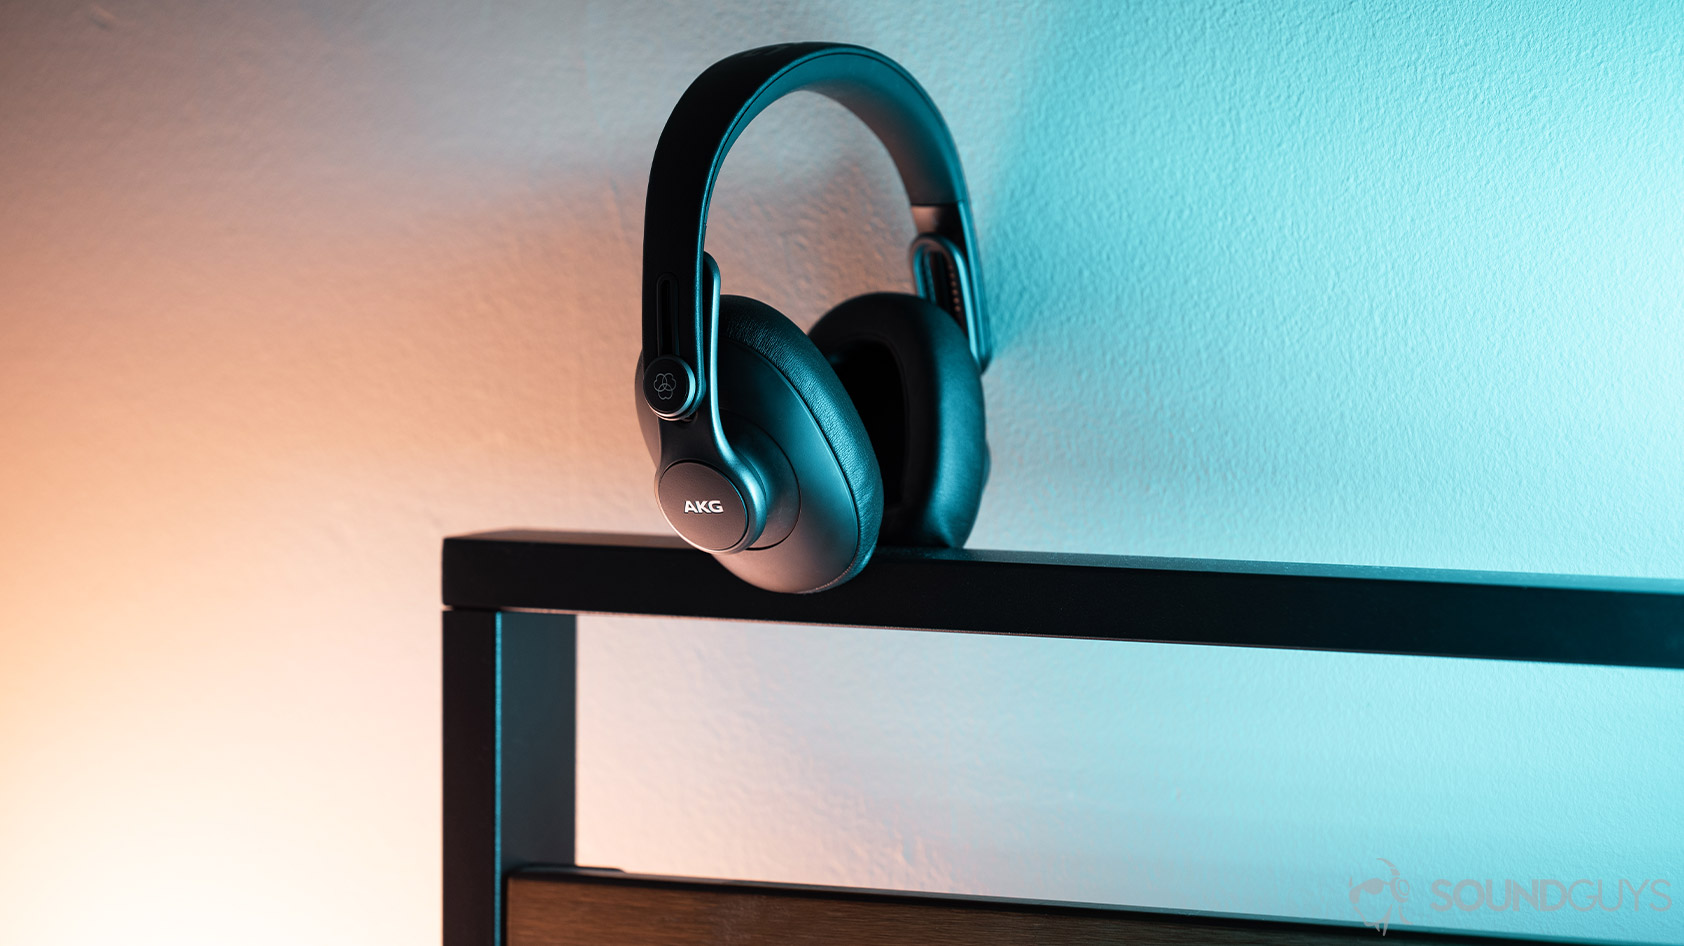 K371  Over-ear, closed-back, foldable studio headphones